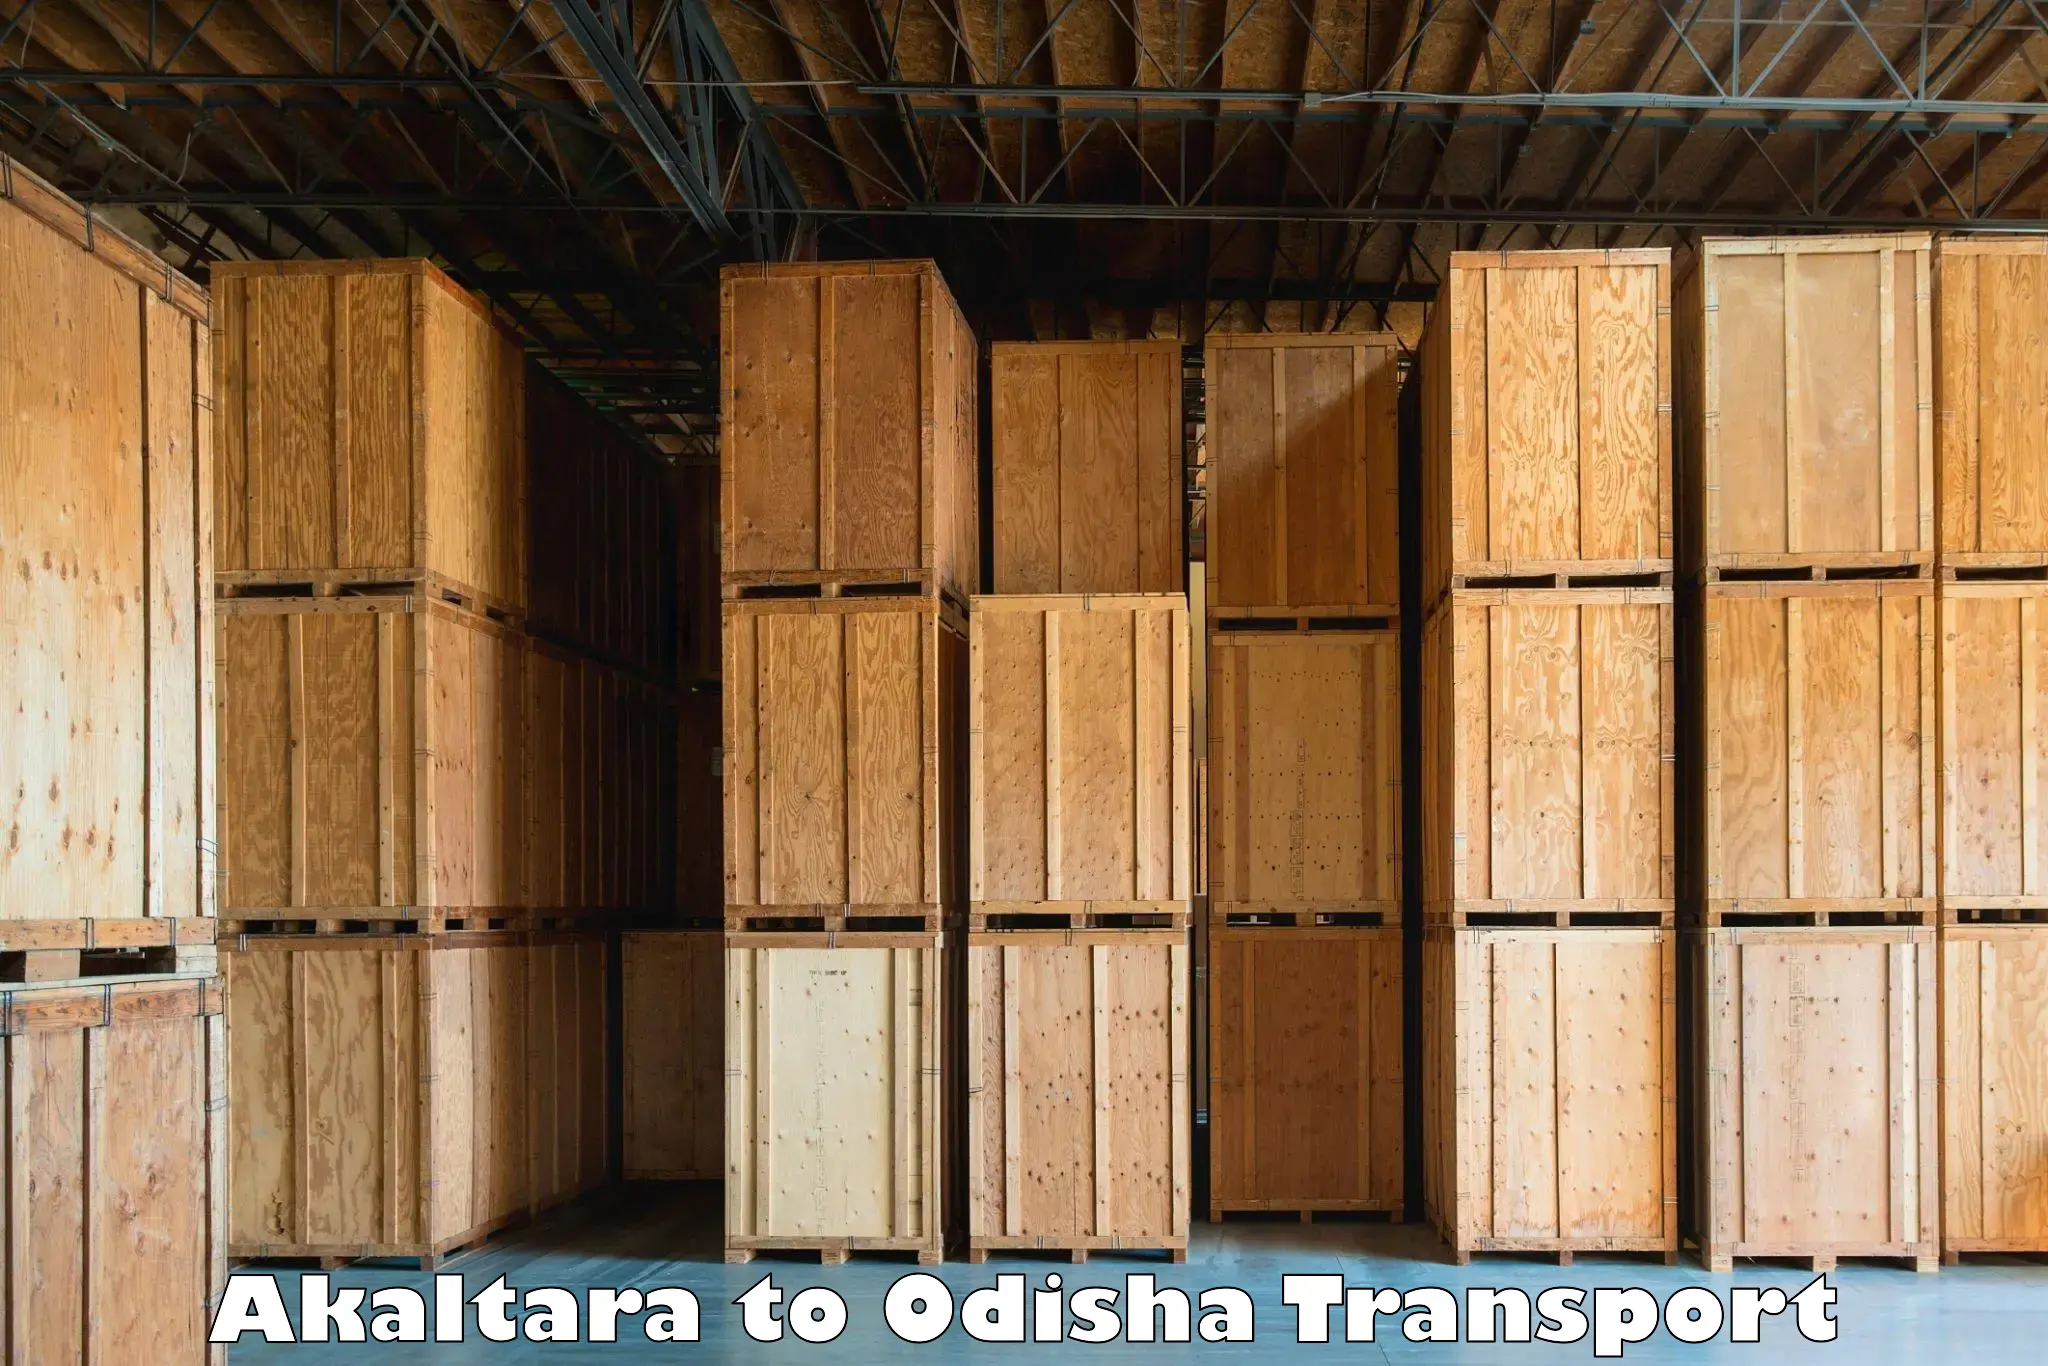 Transport shared services Akaltara to Dandisahi